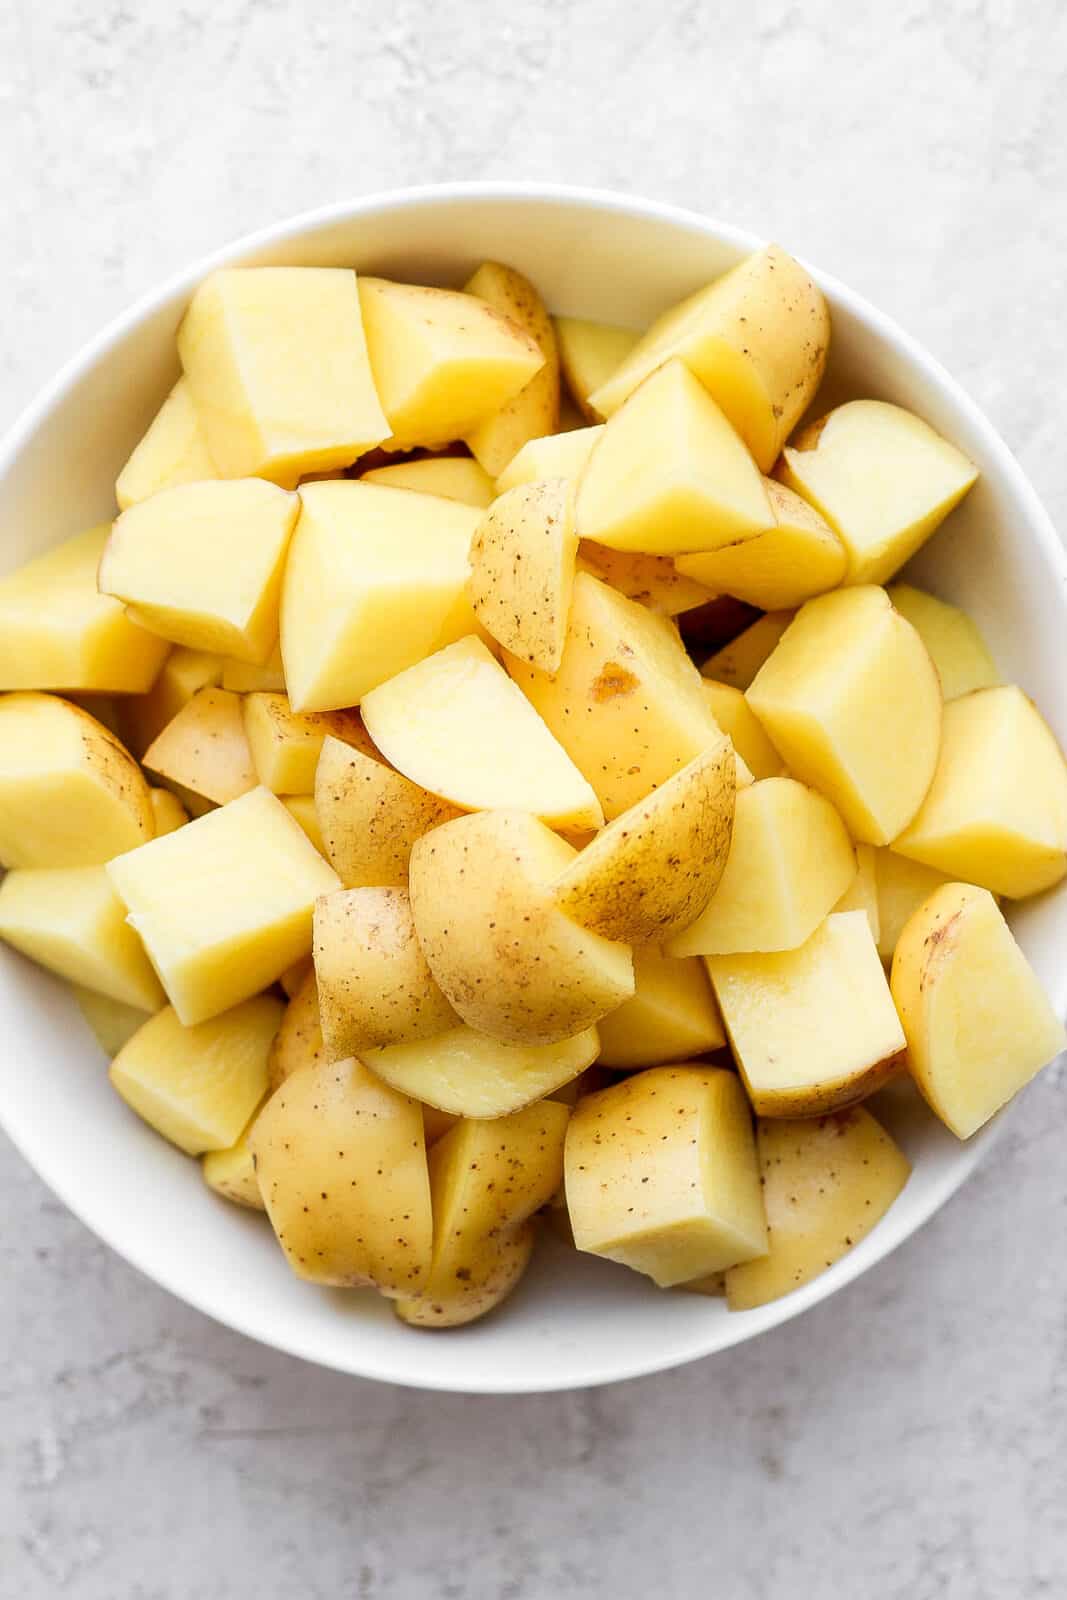 Bowl of cut-up yukon gold potatoes.